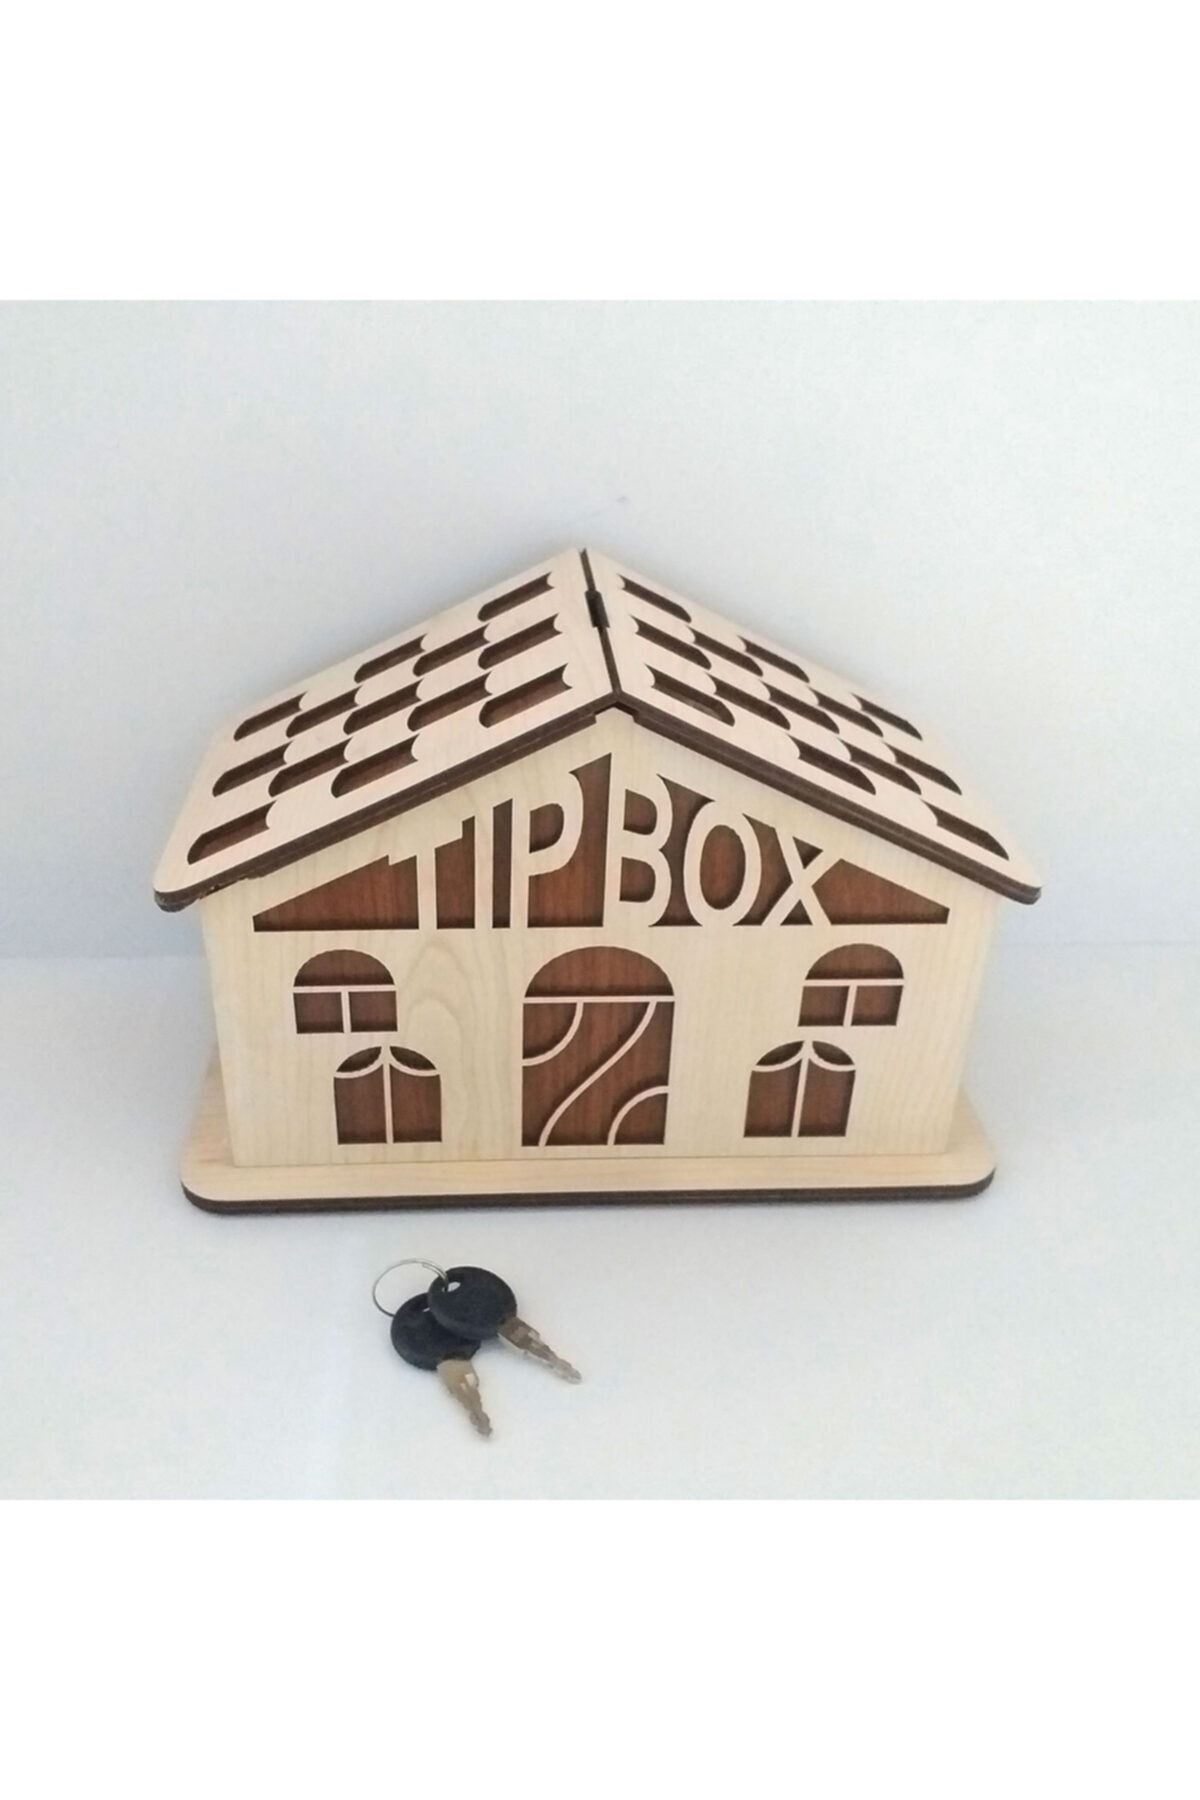 AHŞAP ATÖLYE Tip Box Bahşiş Kutusu Ahşap (18x10x13)cm - Anahtarlı Kilitli